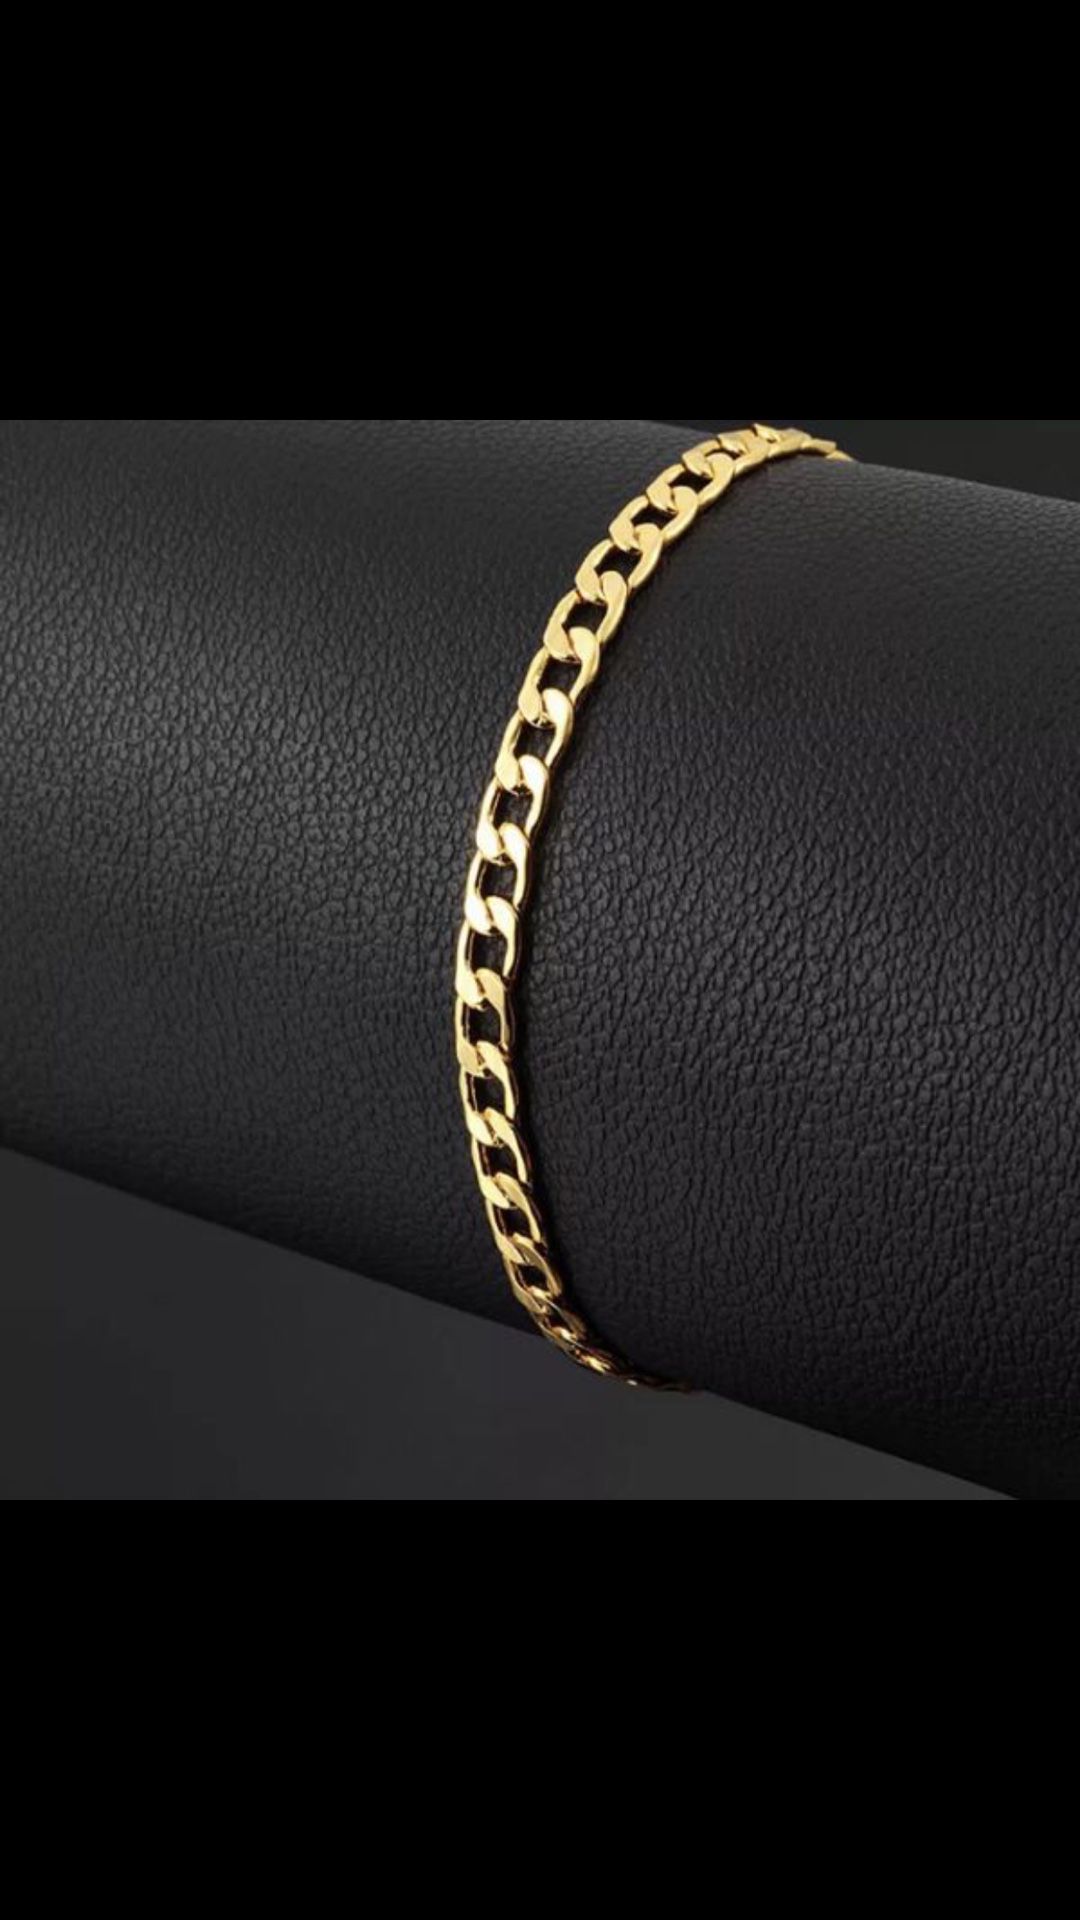 Gold plated bracelet unisex design jewelry accessory